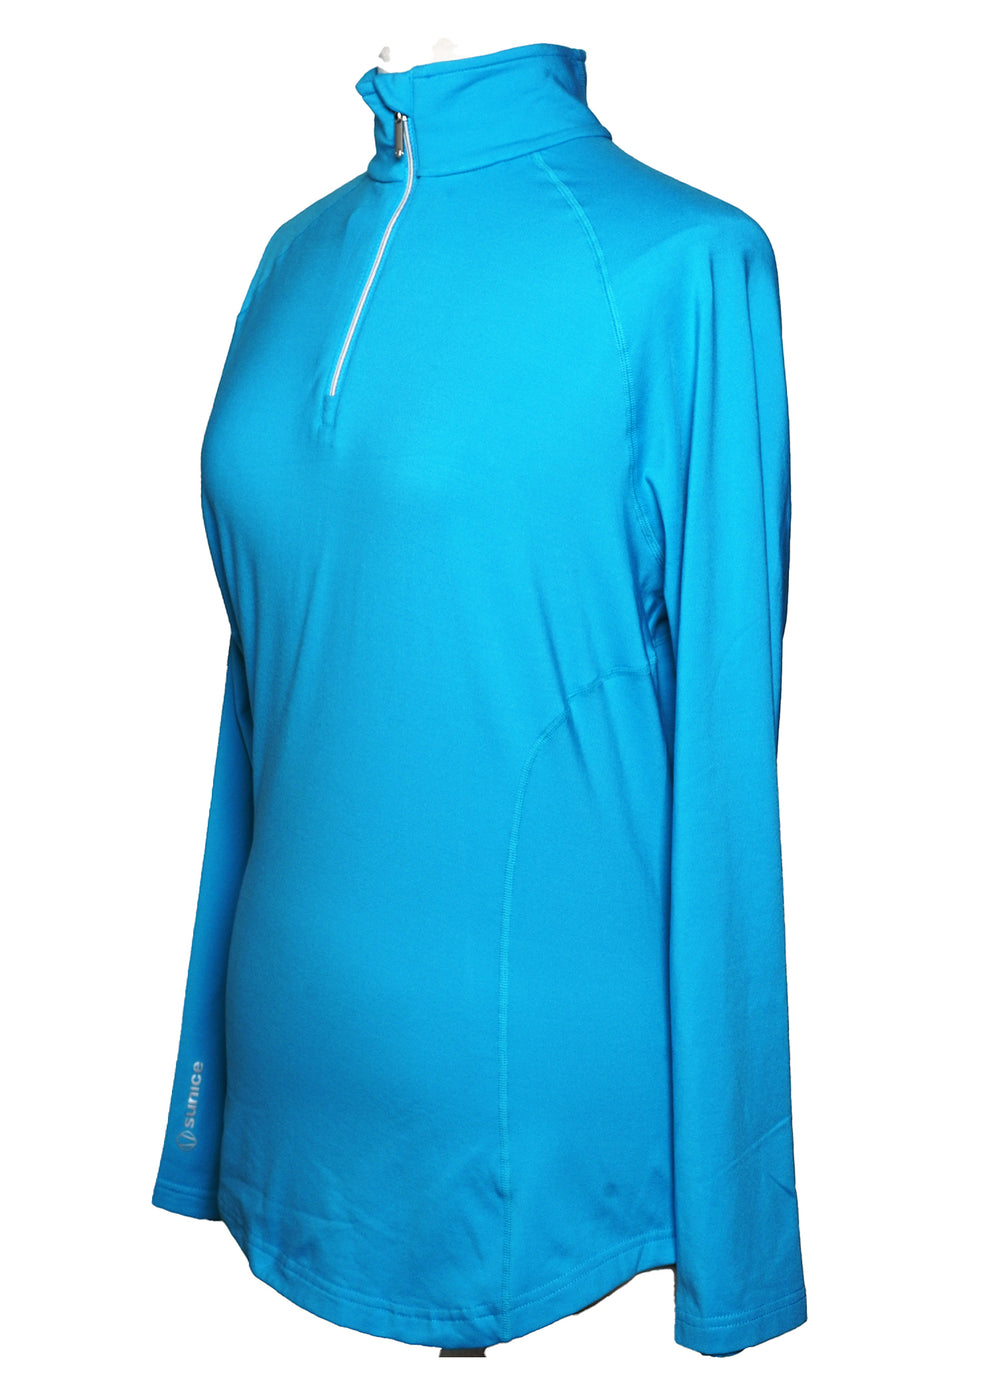 Sunice SKi Lodge II Long Sleeve  Top -  Turquoise Blue - Size XL - Skorzie